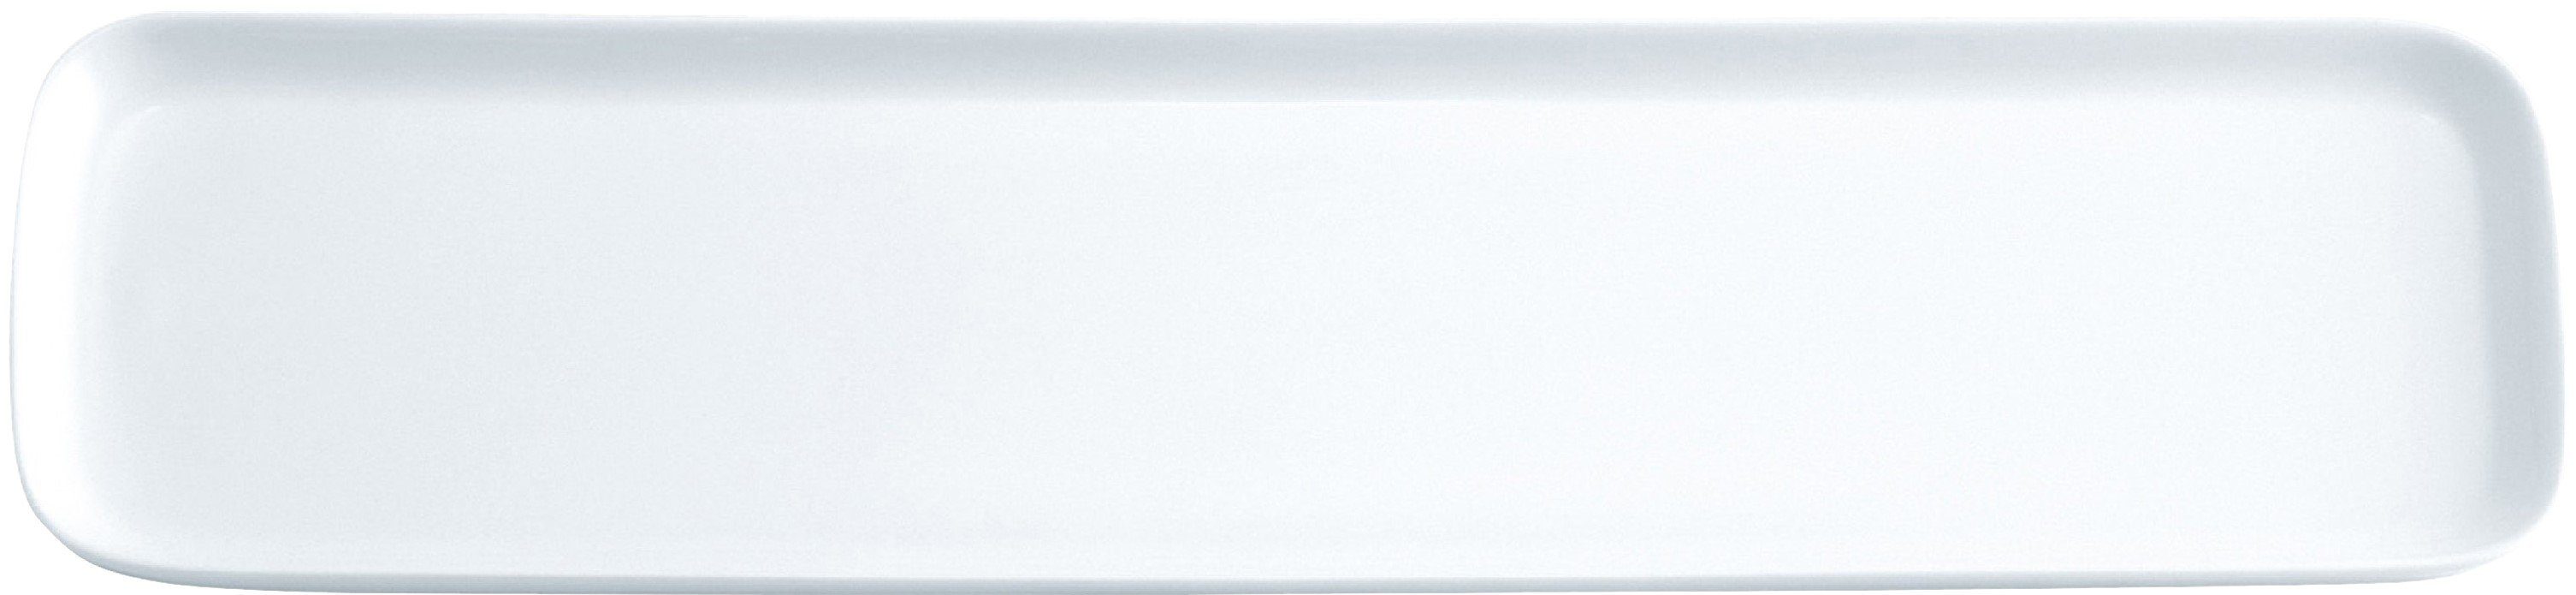 KAHLA Servierplatte BBQ Universal-Tablett 44 x 11cm, Porzellan, Made in Germany